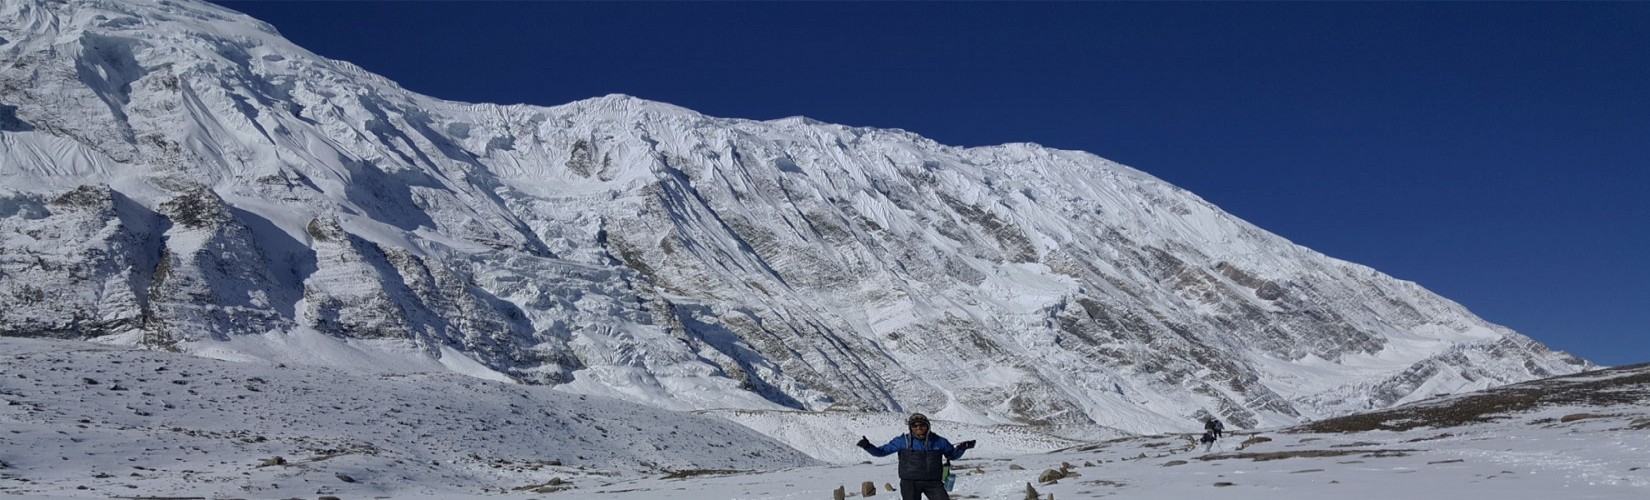 Annapurna Circuit Trek